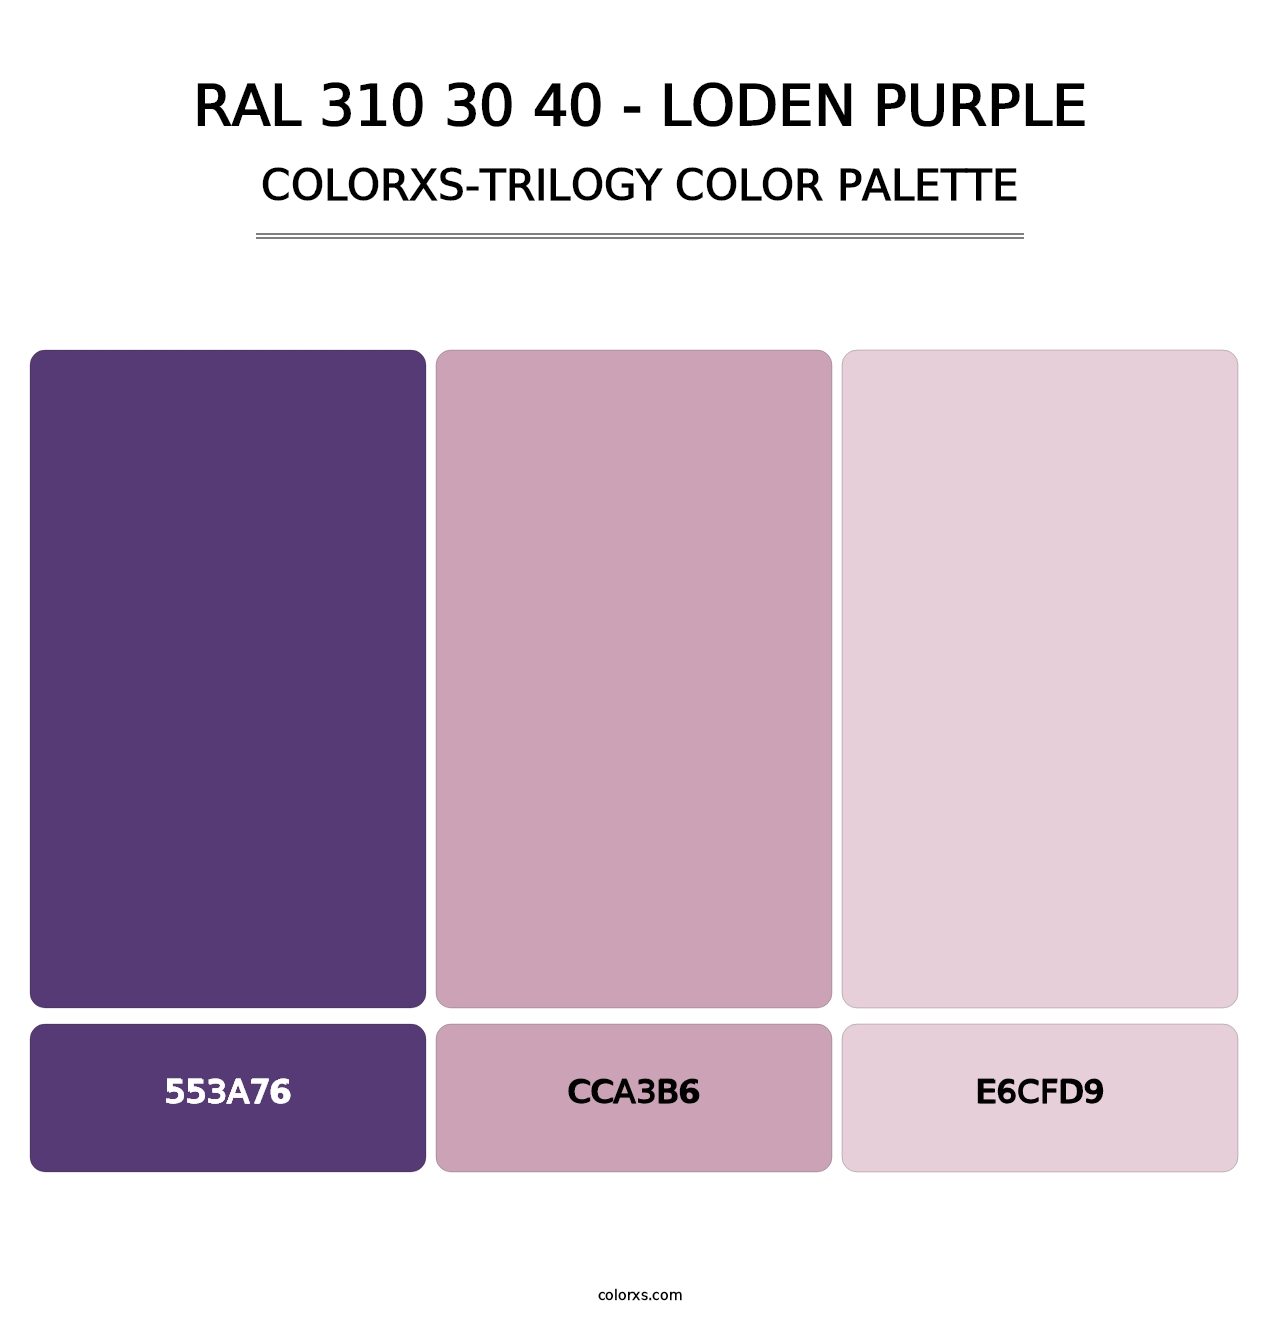 RAL 310 30 40 - Loden Purple - Colorxs Trilogy Palette